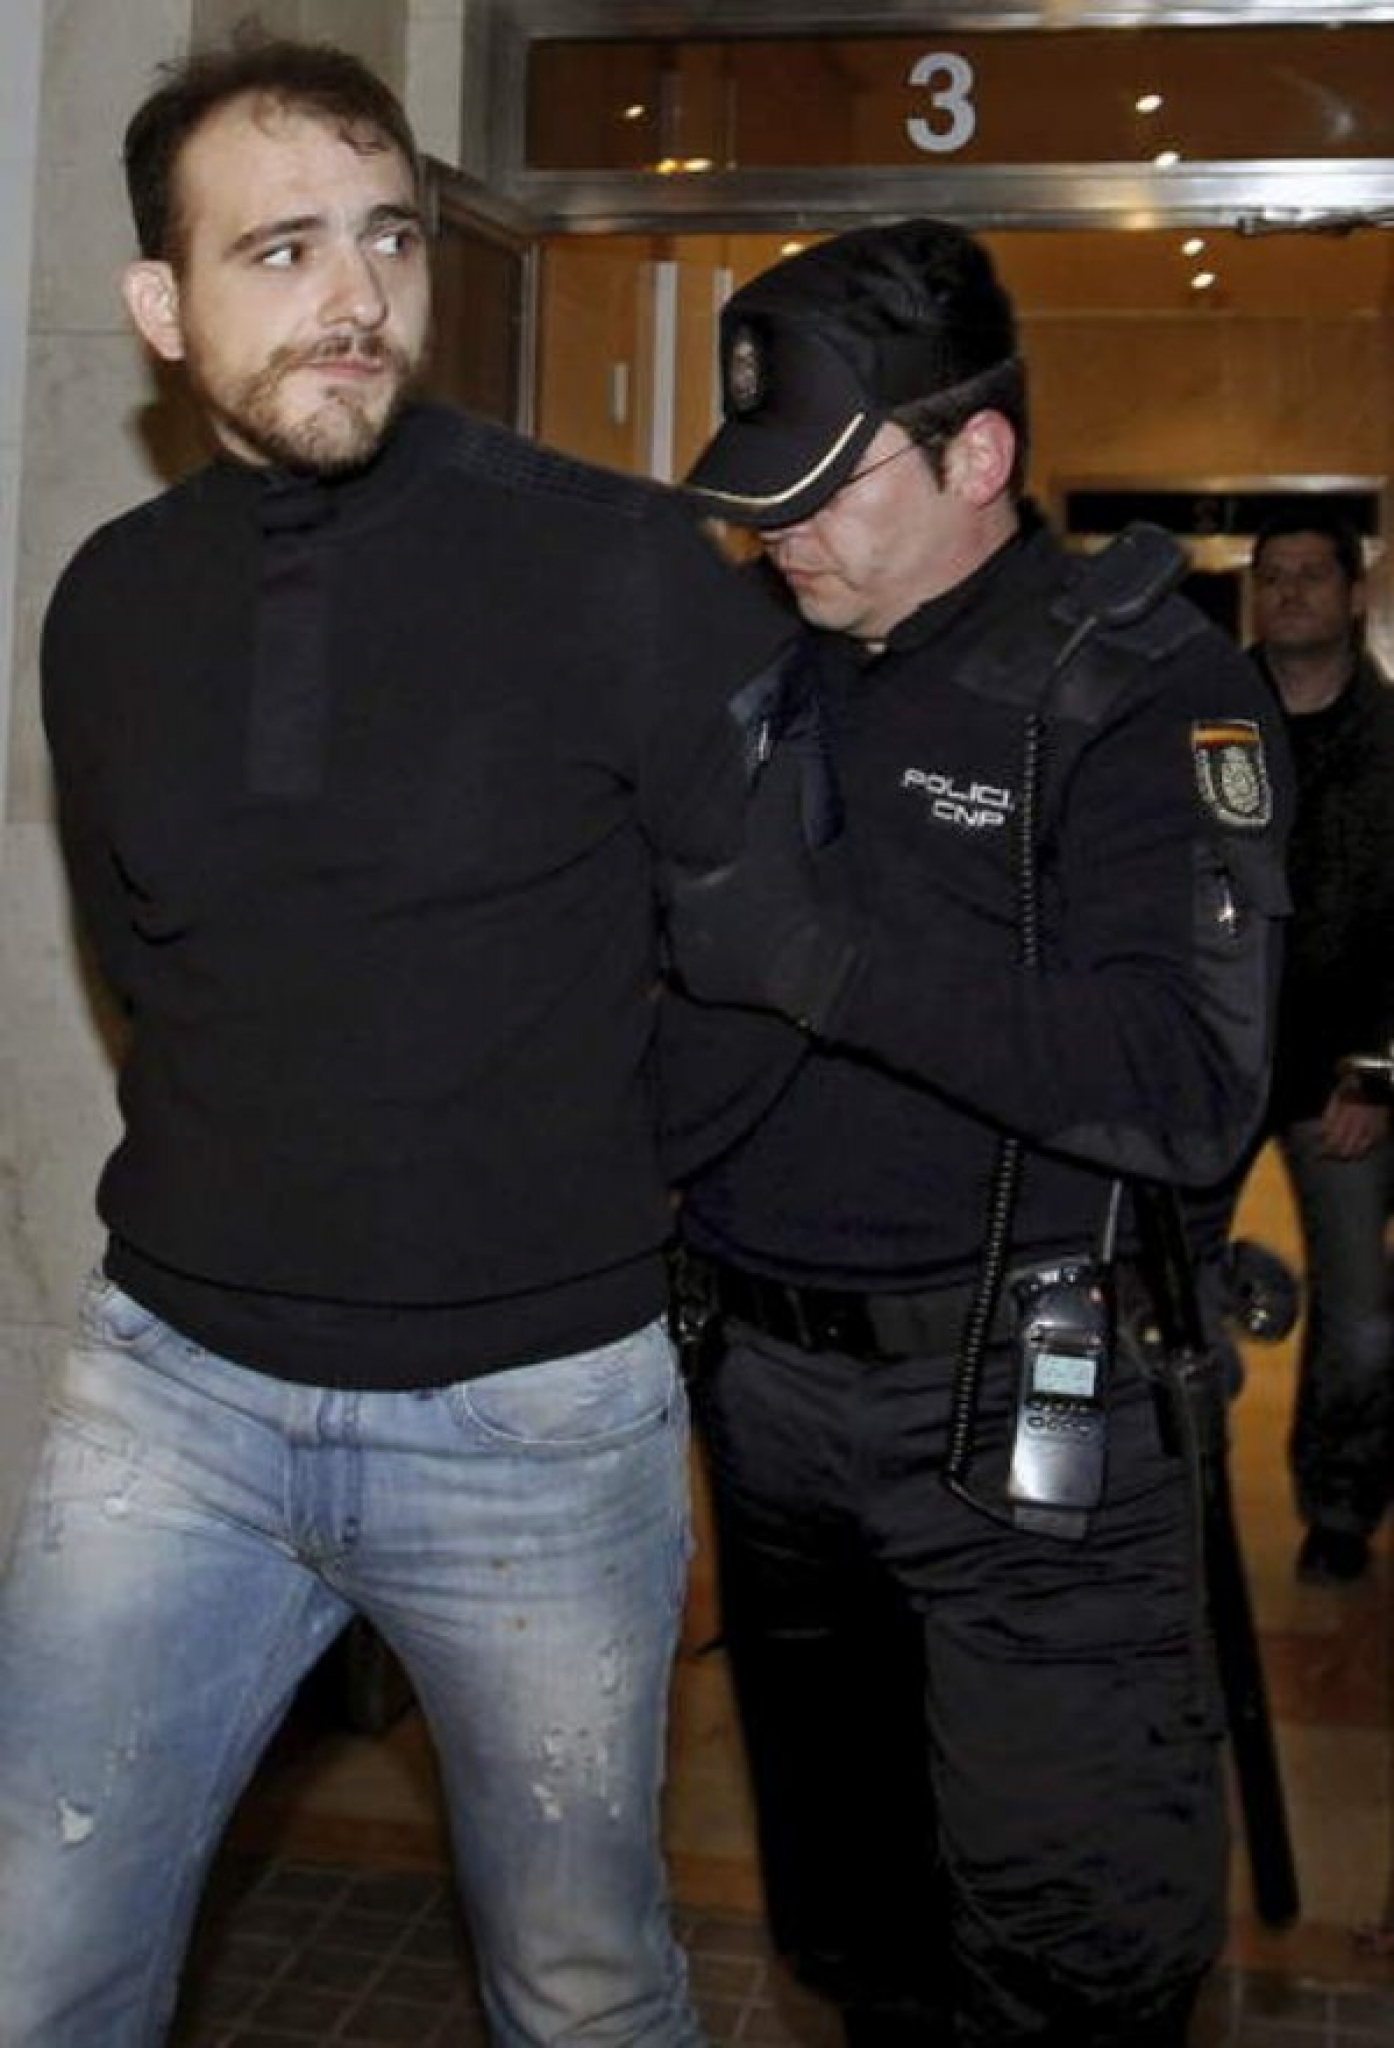 OTAC UBIJAO ZA BOJOVIĆEV KLAN SIN NAORUŽAVAO BELIVUKA Dušan Lovrenović (28), vođa kriminalne grupe iz Gradiške, predao se zagrebačkoj policiji